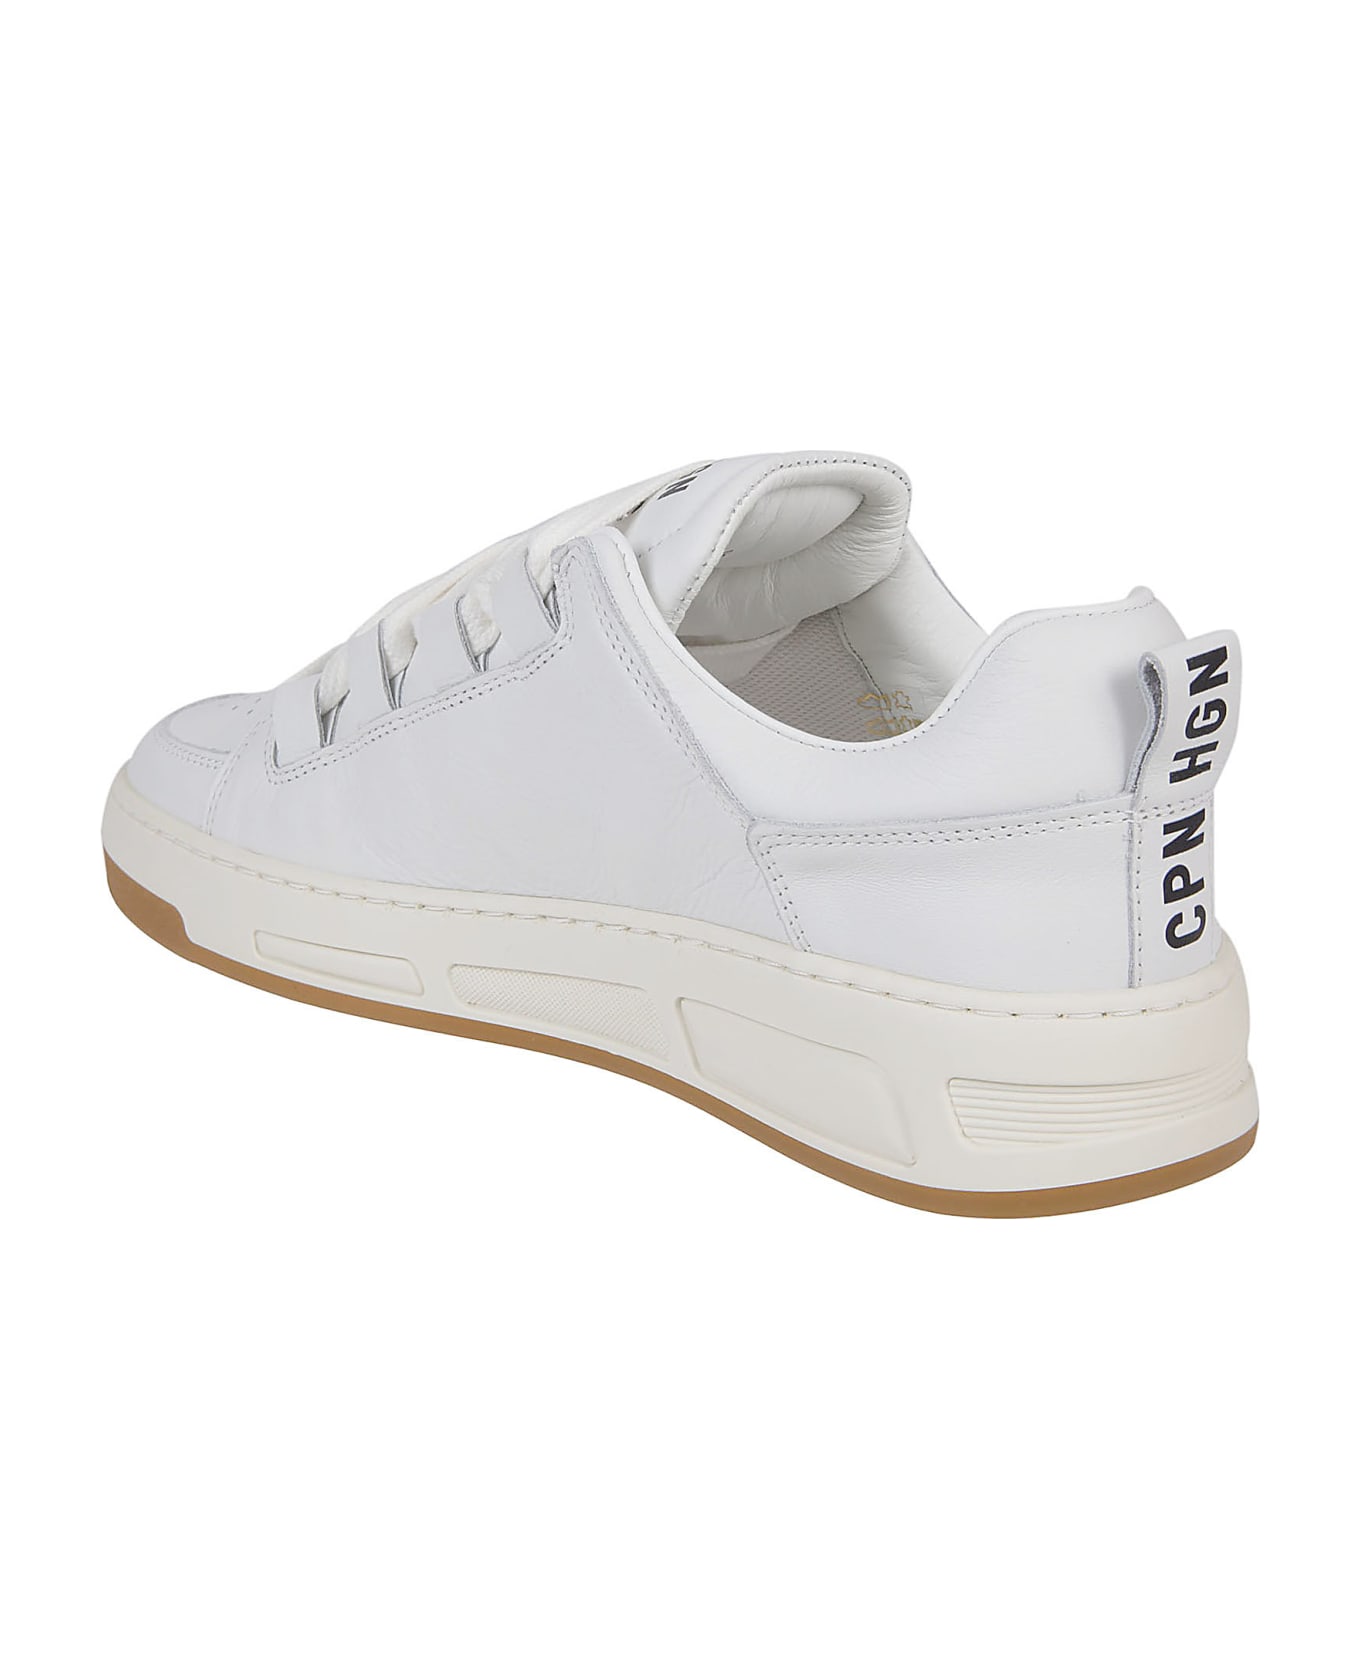 Copenhagen Studios Flat Shoes White - White スニーカー